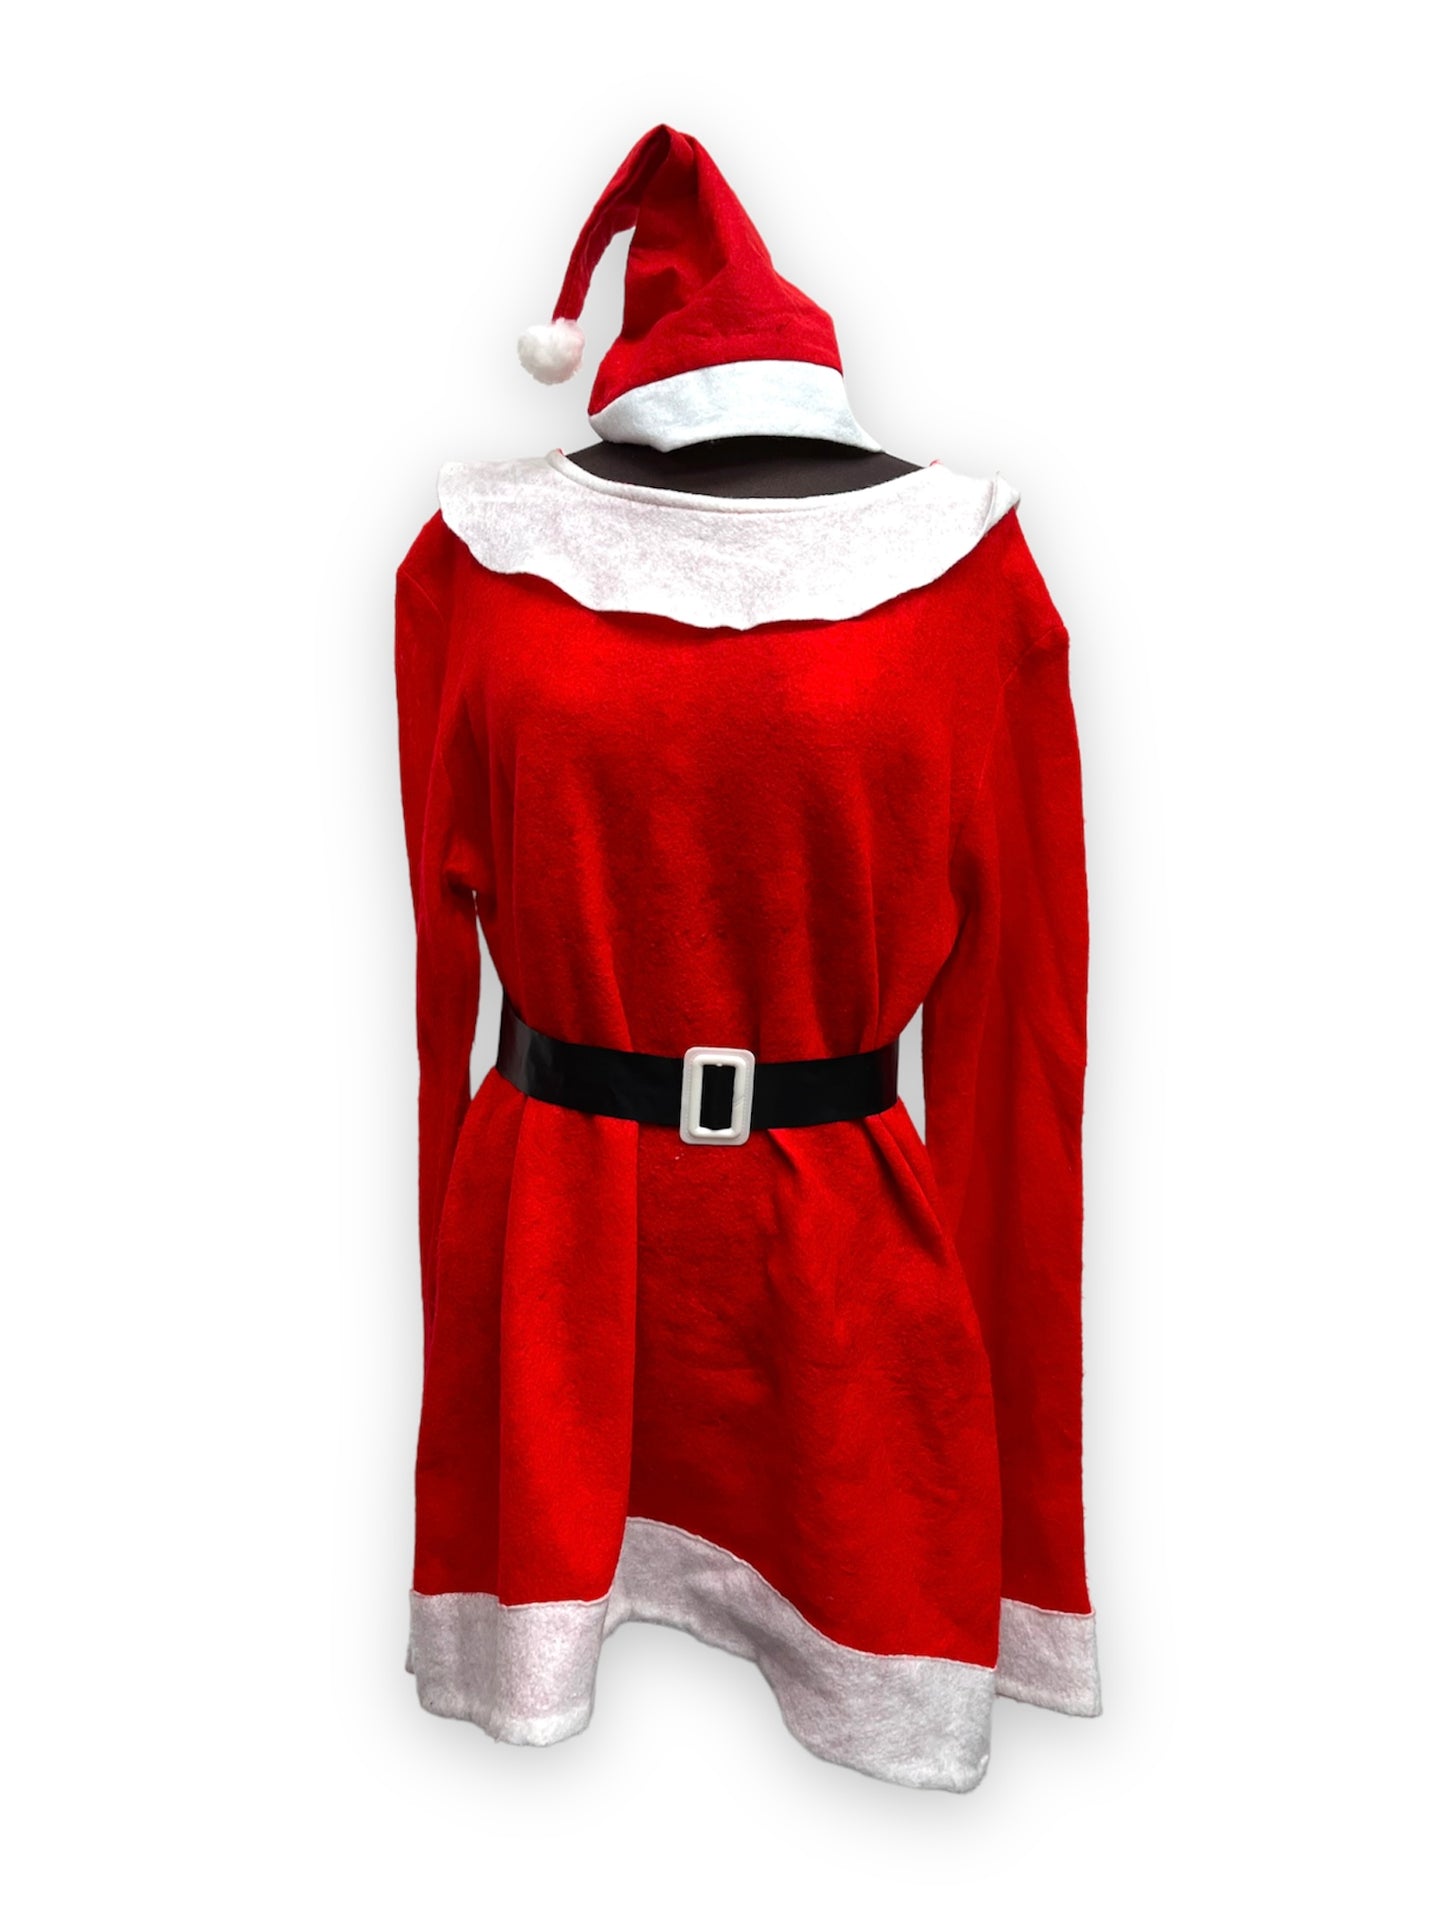 Ms Christmas/Mrs Claus Budget Felt Dress Size Large - Ex Hire Fancy Dress Costume